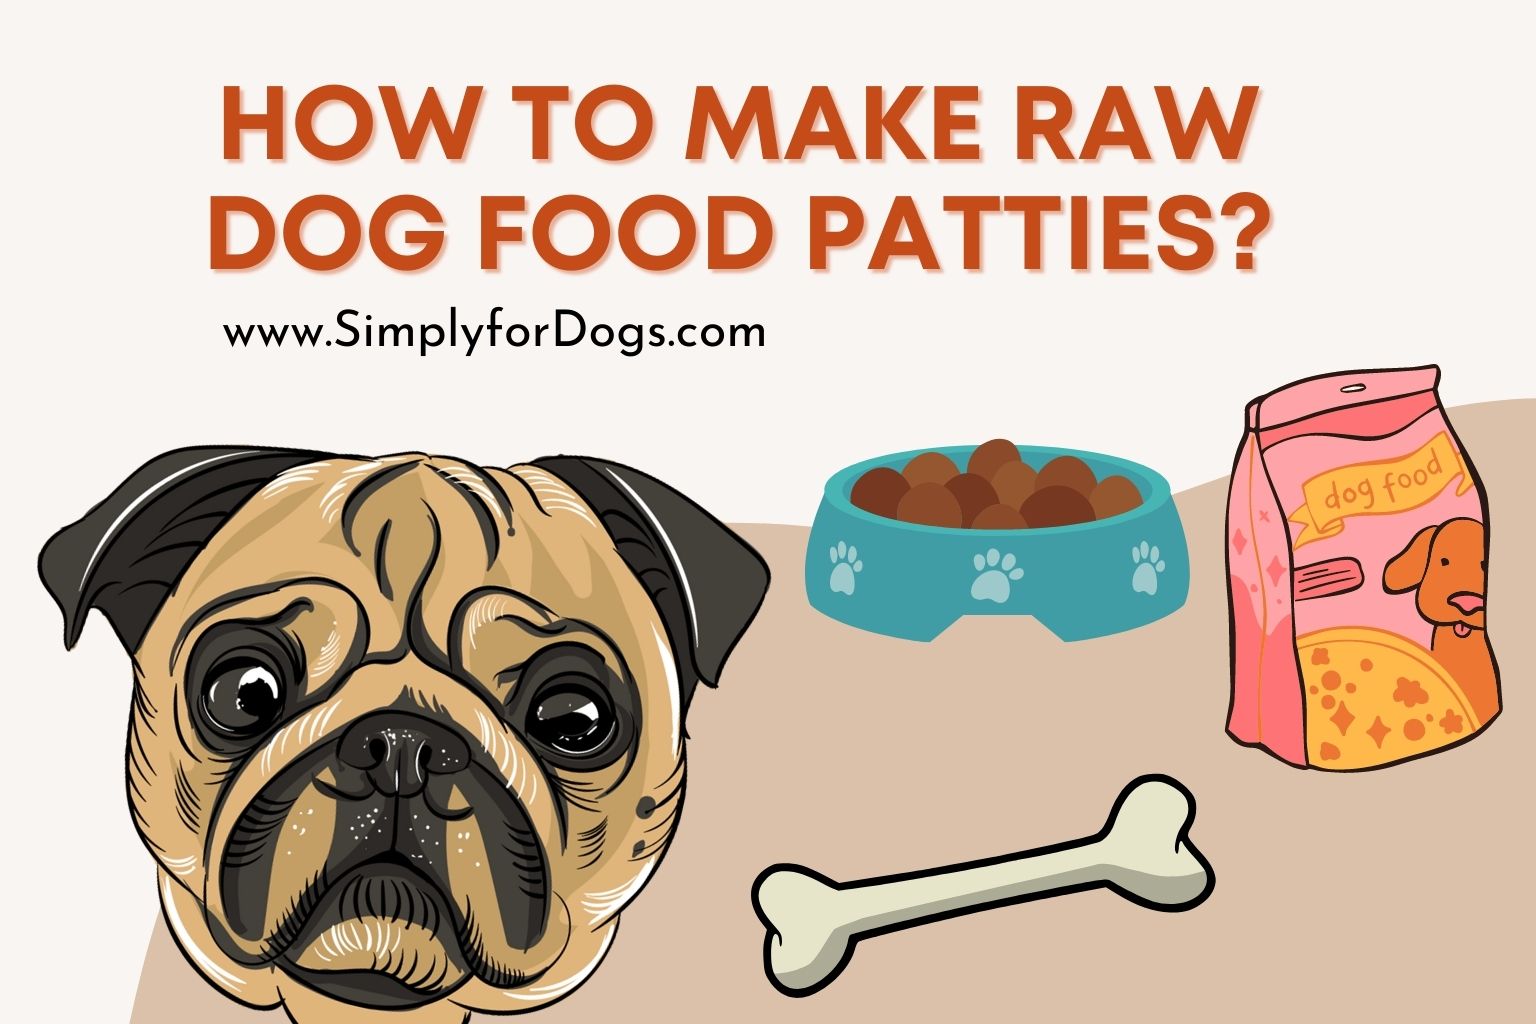 How to Make Raw Dog Food Patties